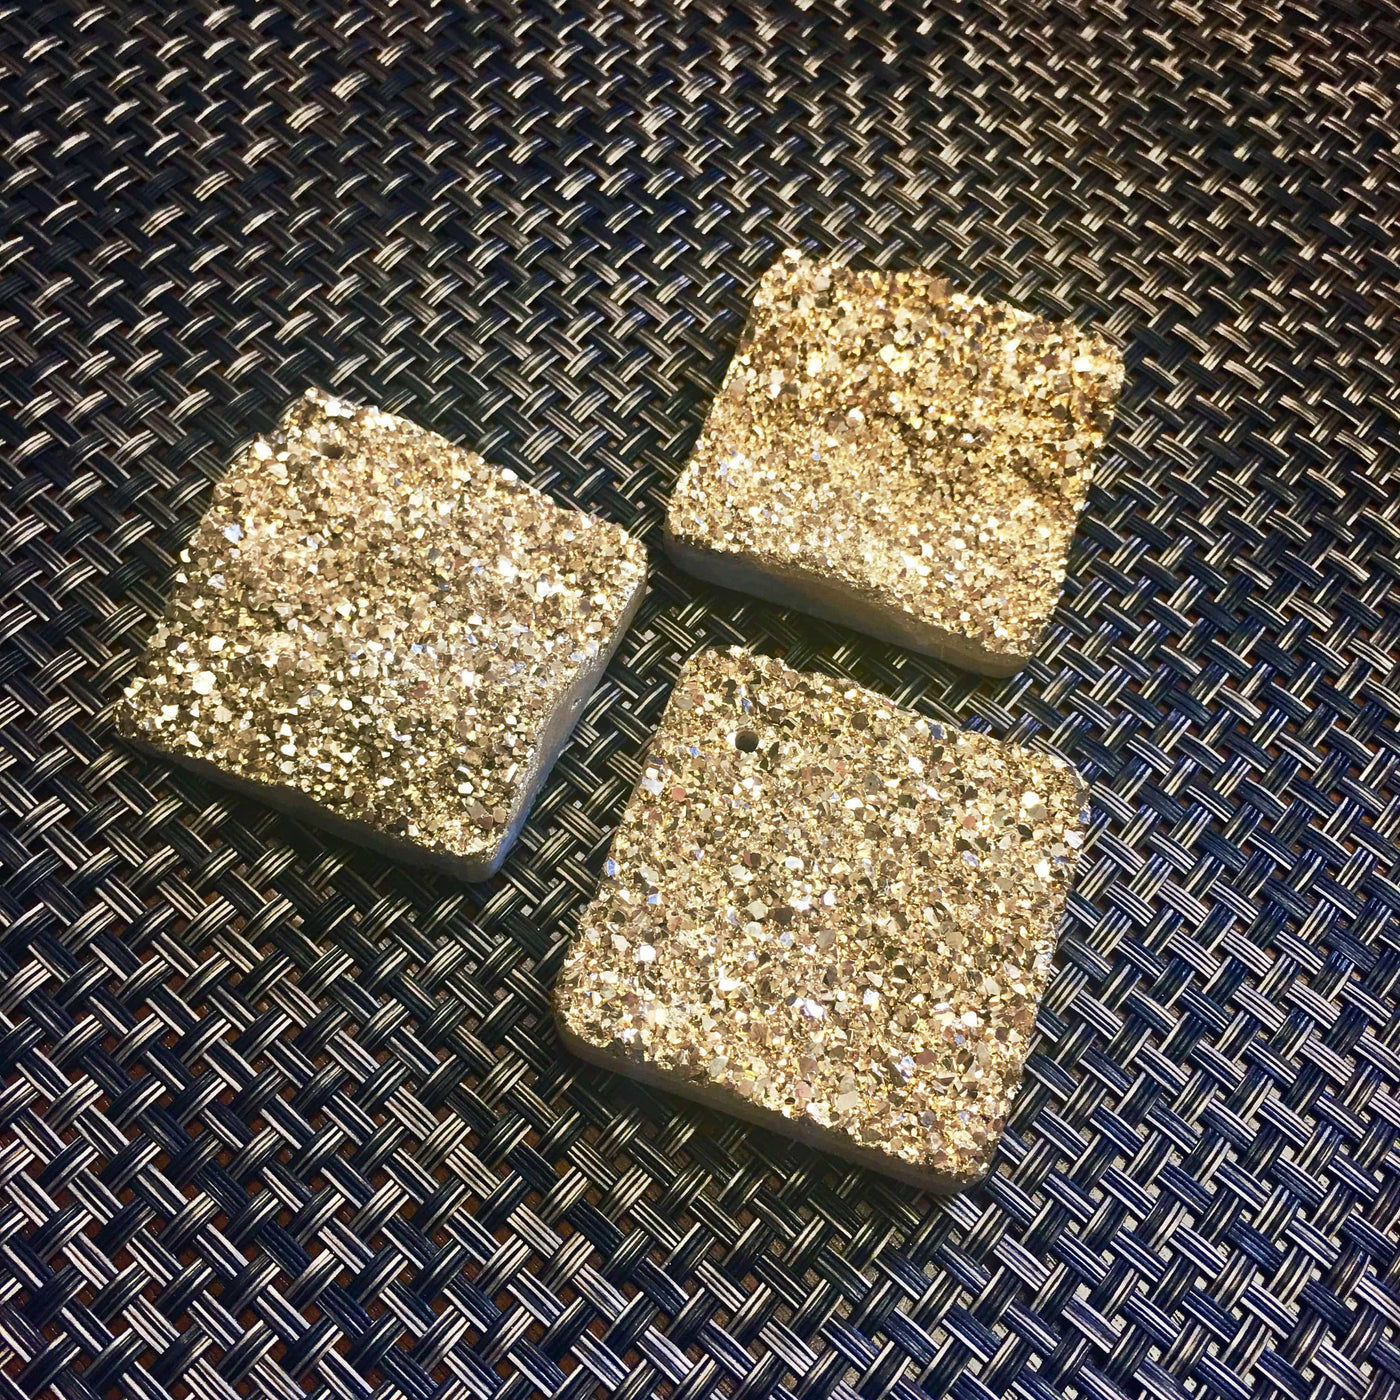 3 druzy diamond shaped beads on dark background